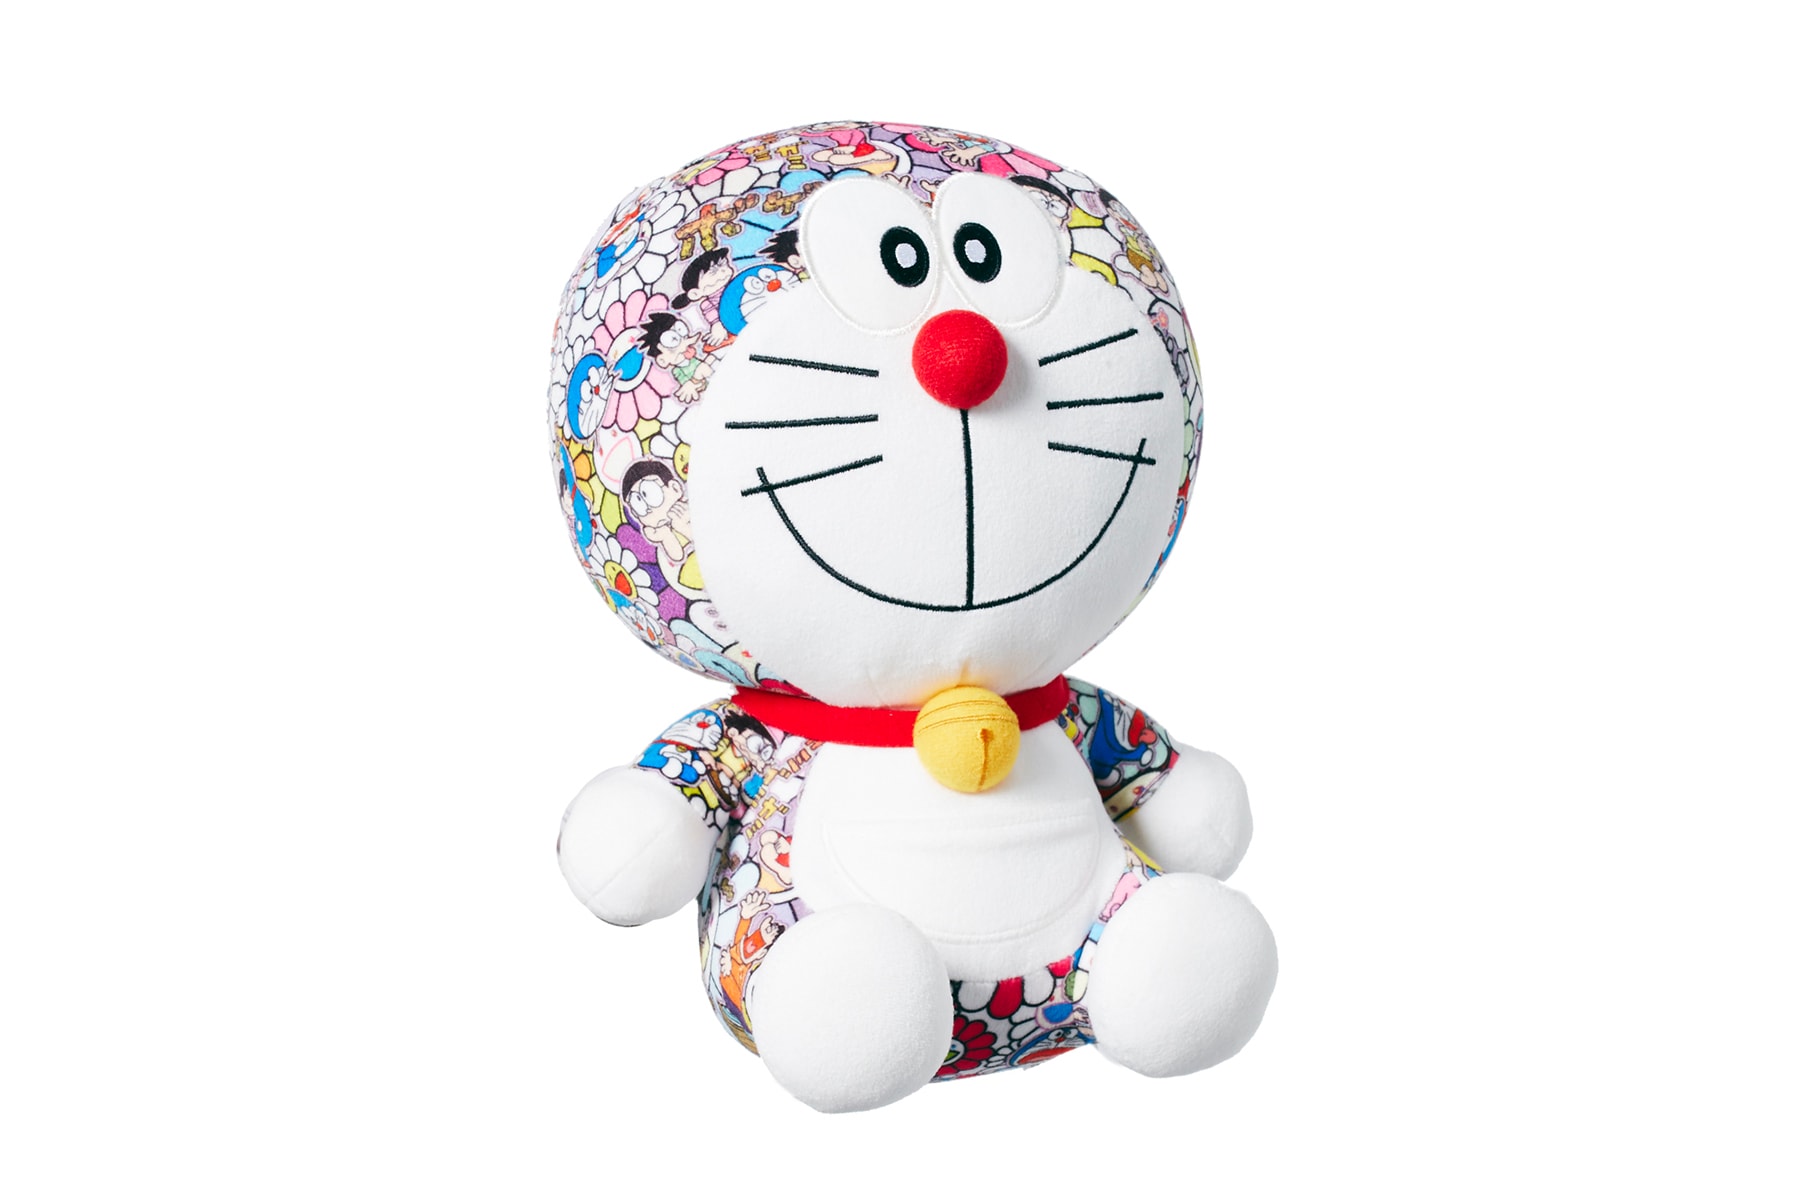 Doraemon Takashi Murakami Uniqlo UT T-Shirts Plush Toy Flower Price Release Date Information Where to Buy Women Men Japanese Artist Collaboration Collection